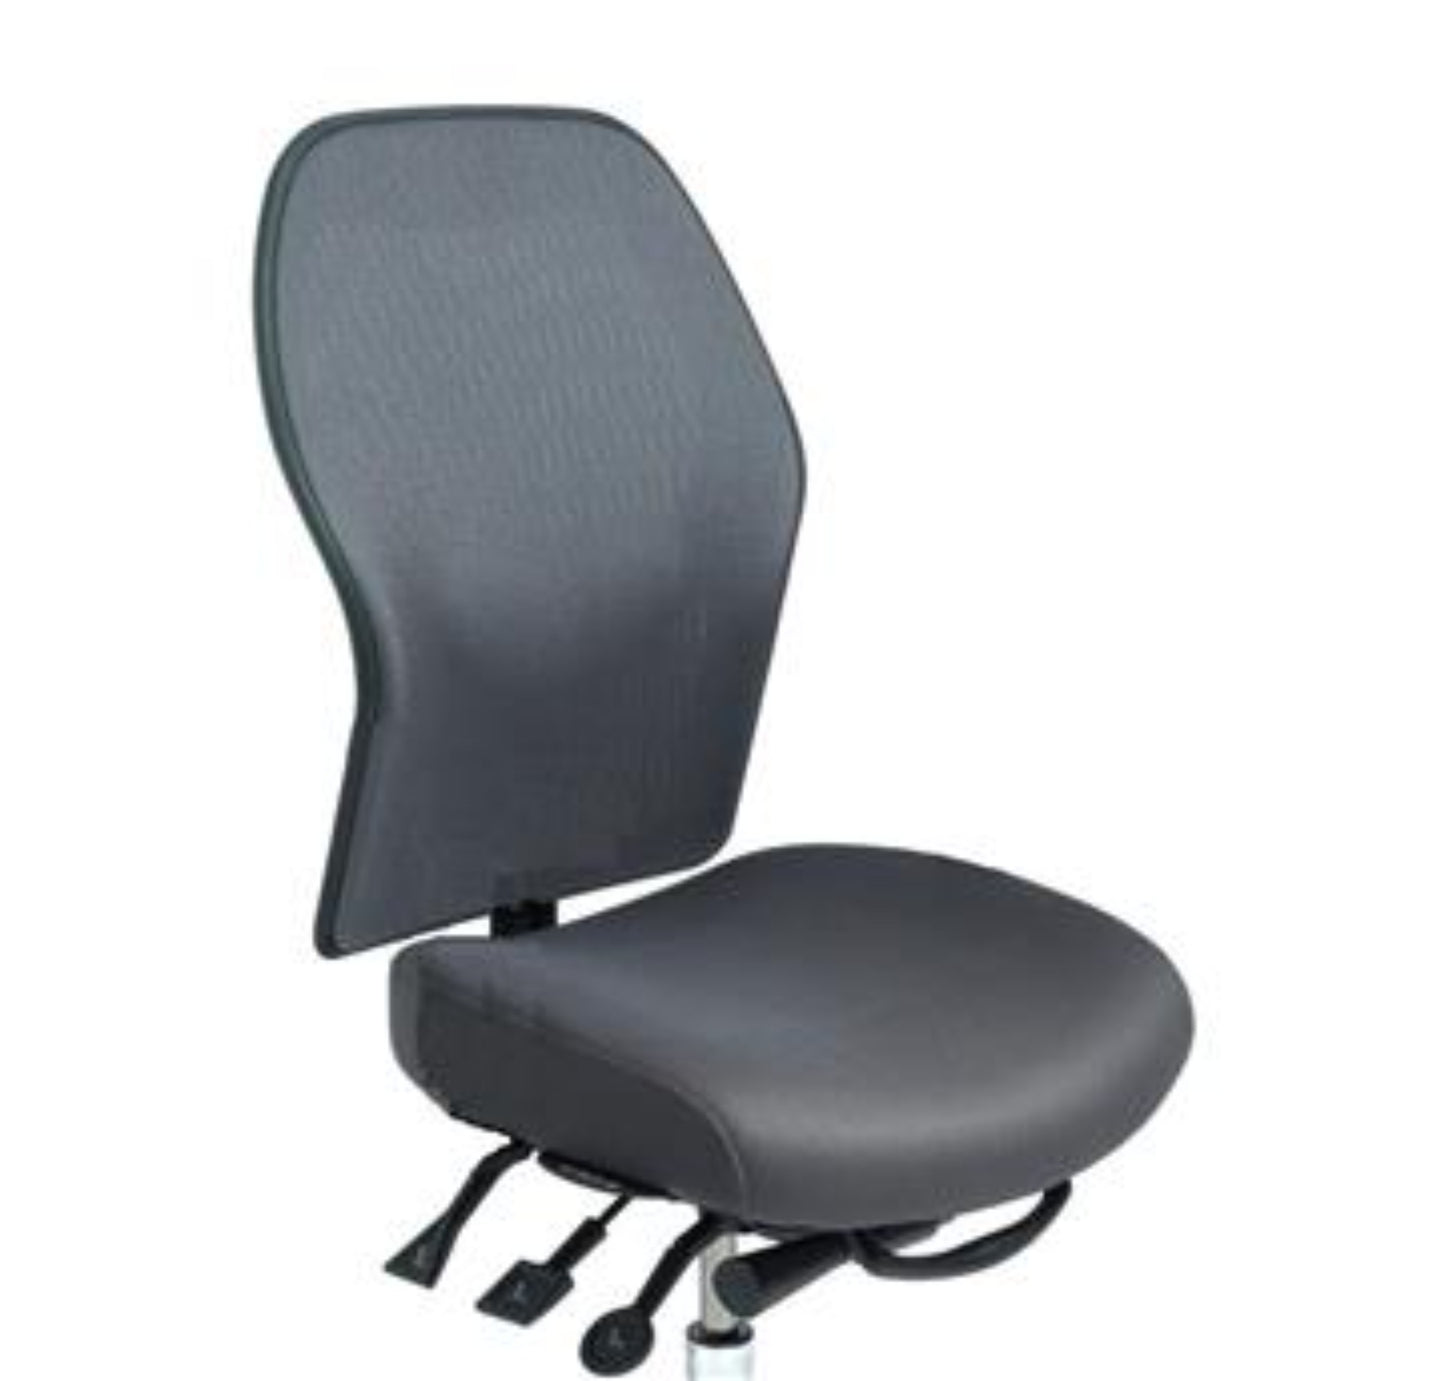 VanGo ecoMesh Armless Chair with AutoReturn Lift